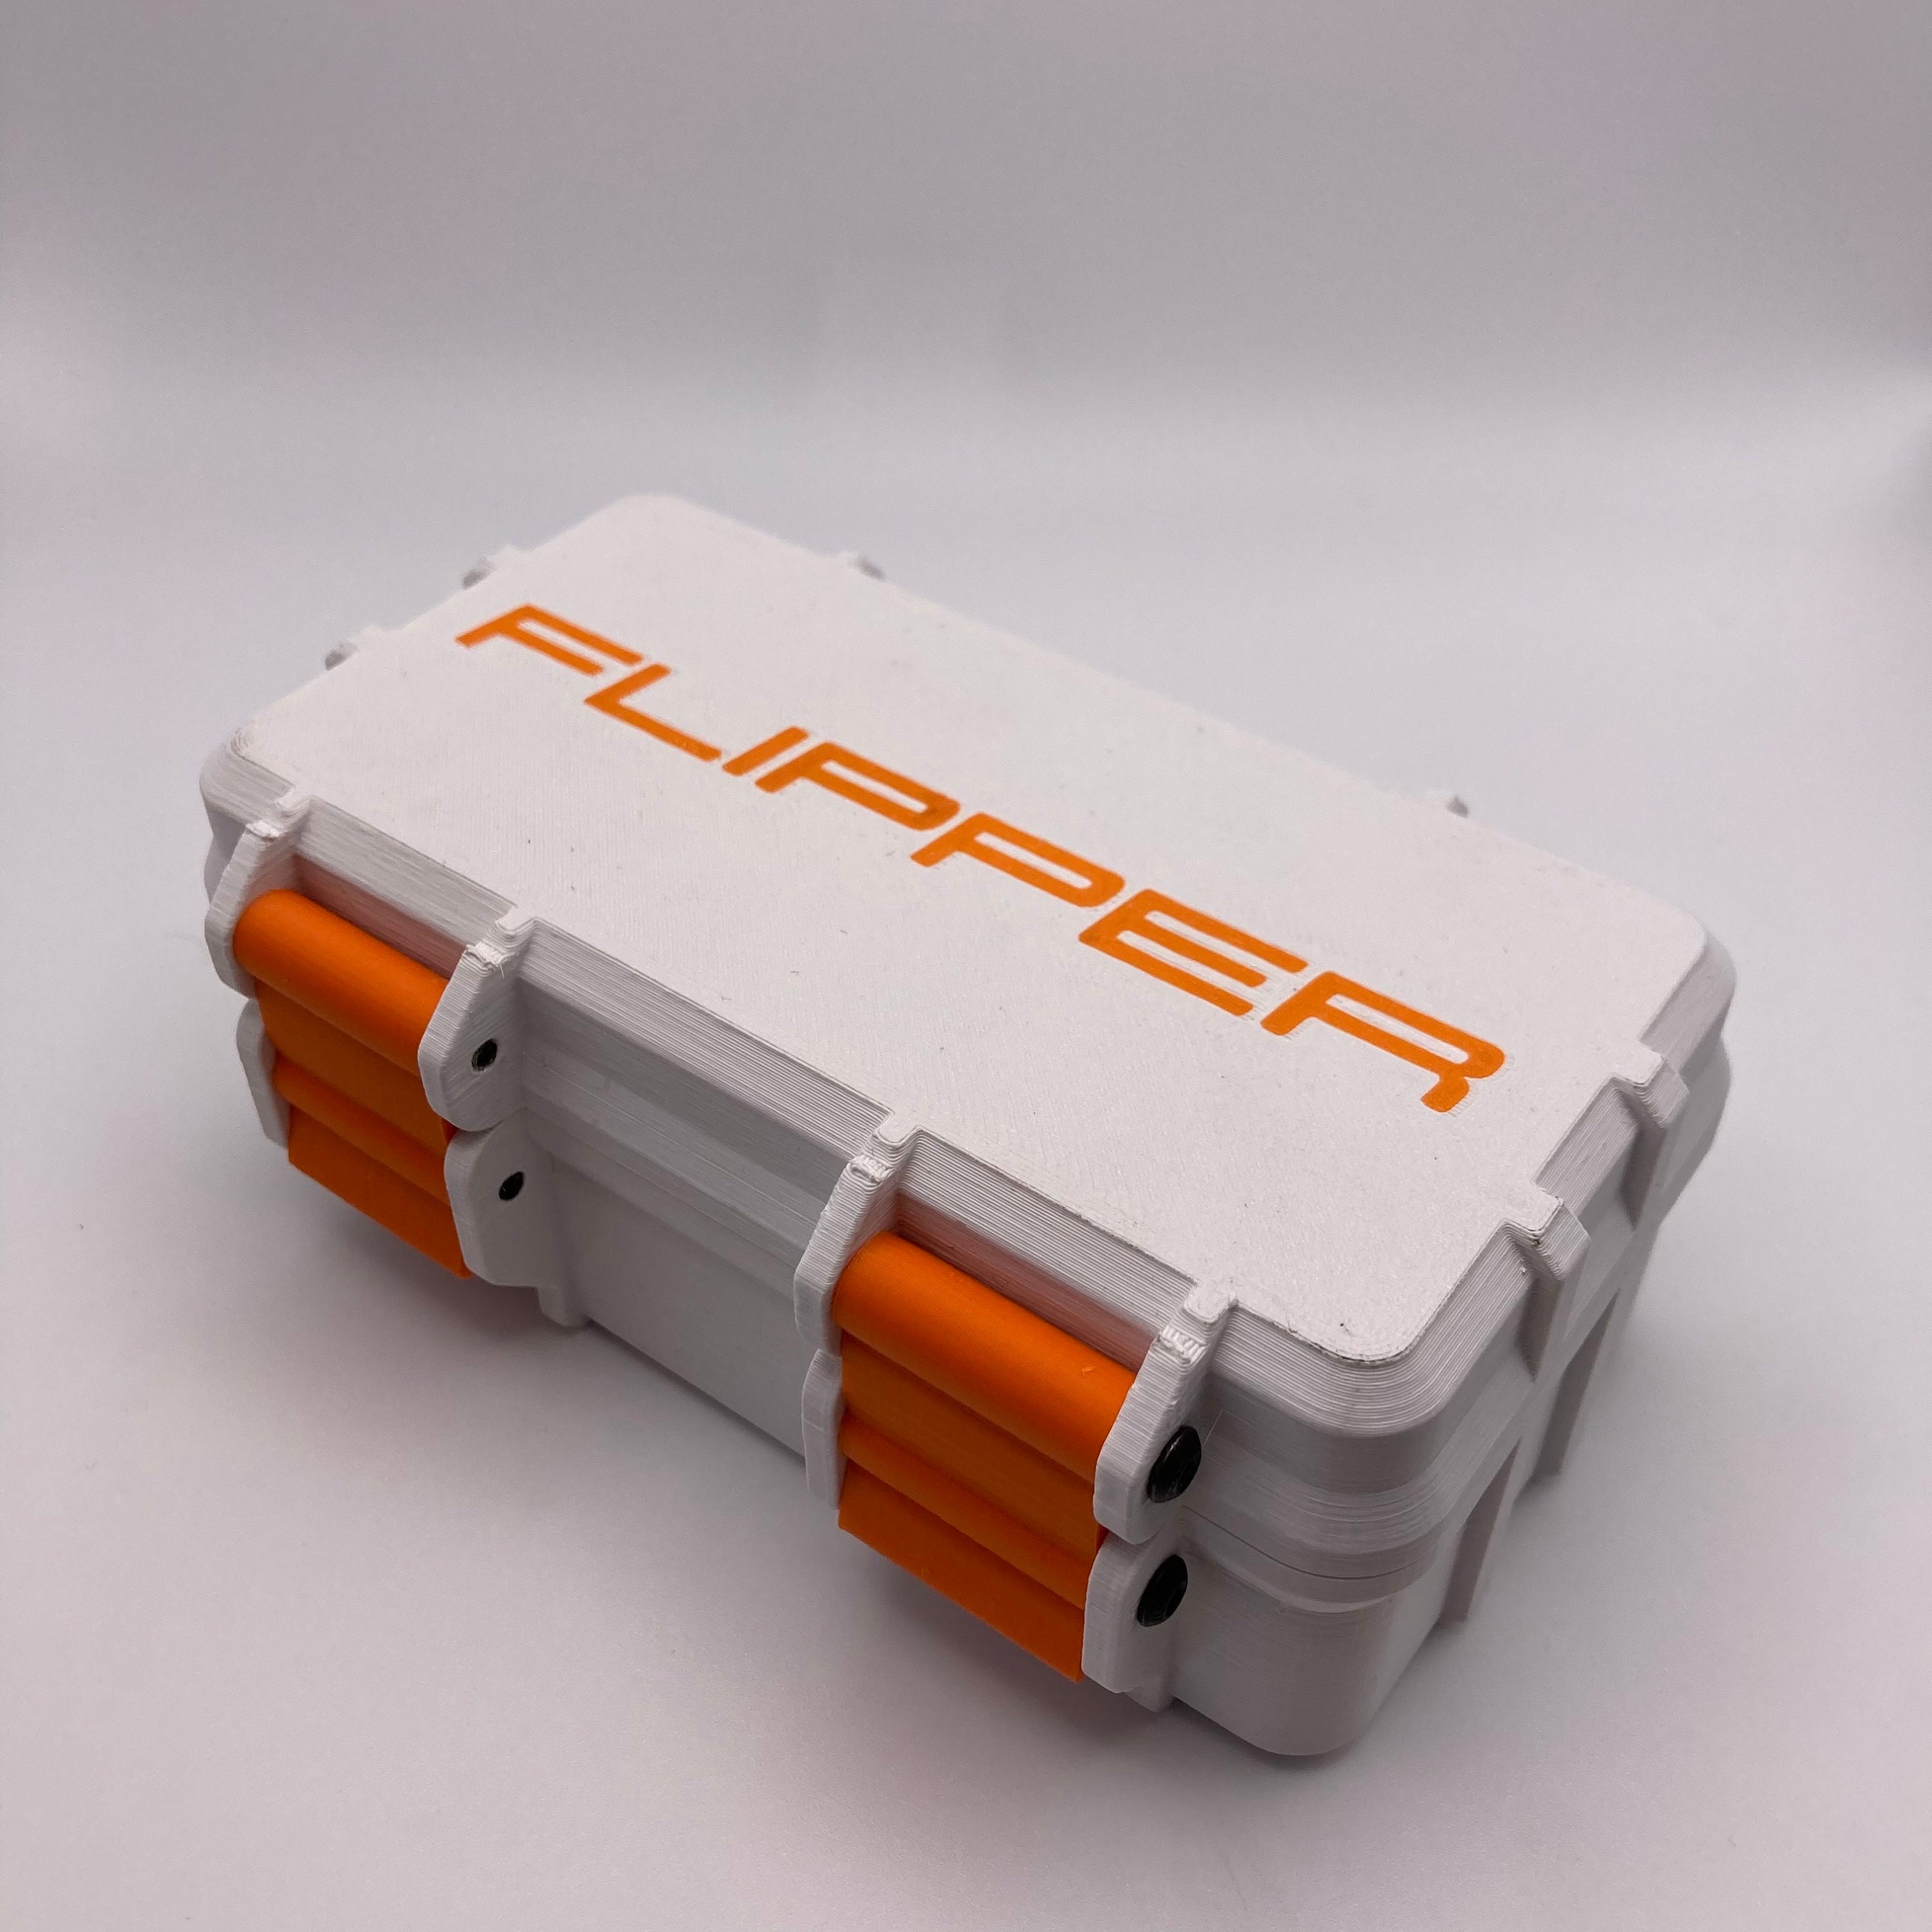  Flipper Zero Accessory Field Kit with Box/Low Profile